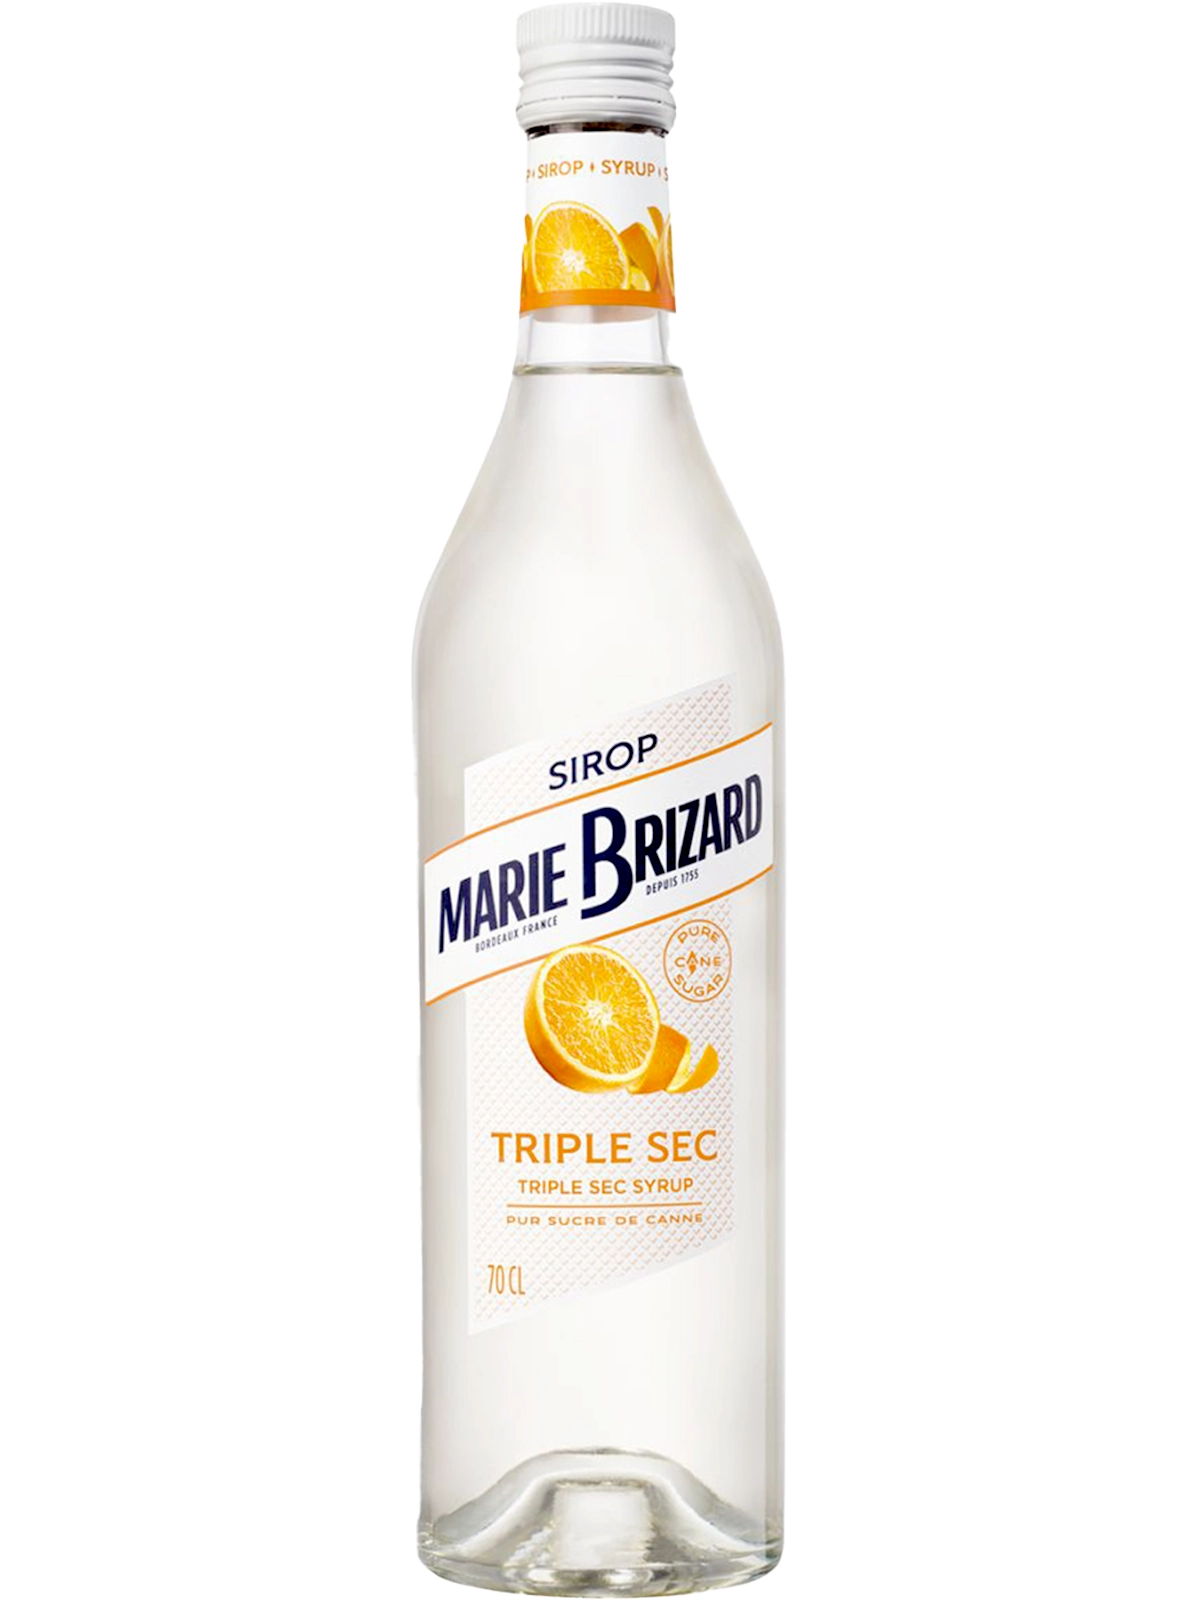 Buy Marie Brizard Triple Sec online